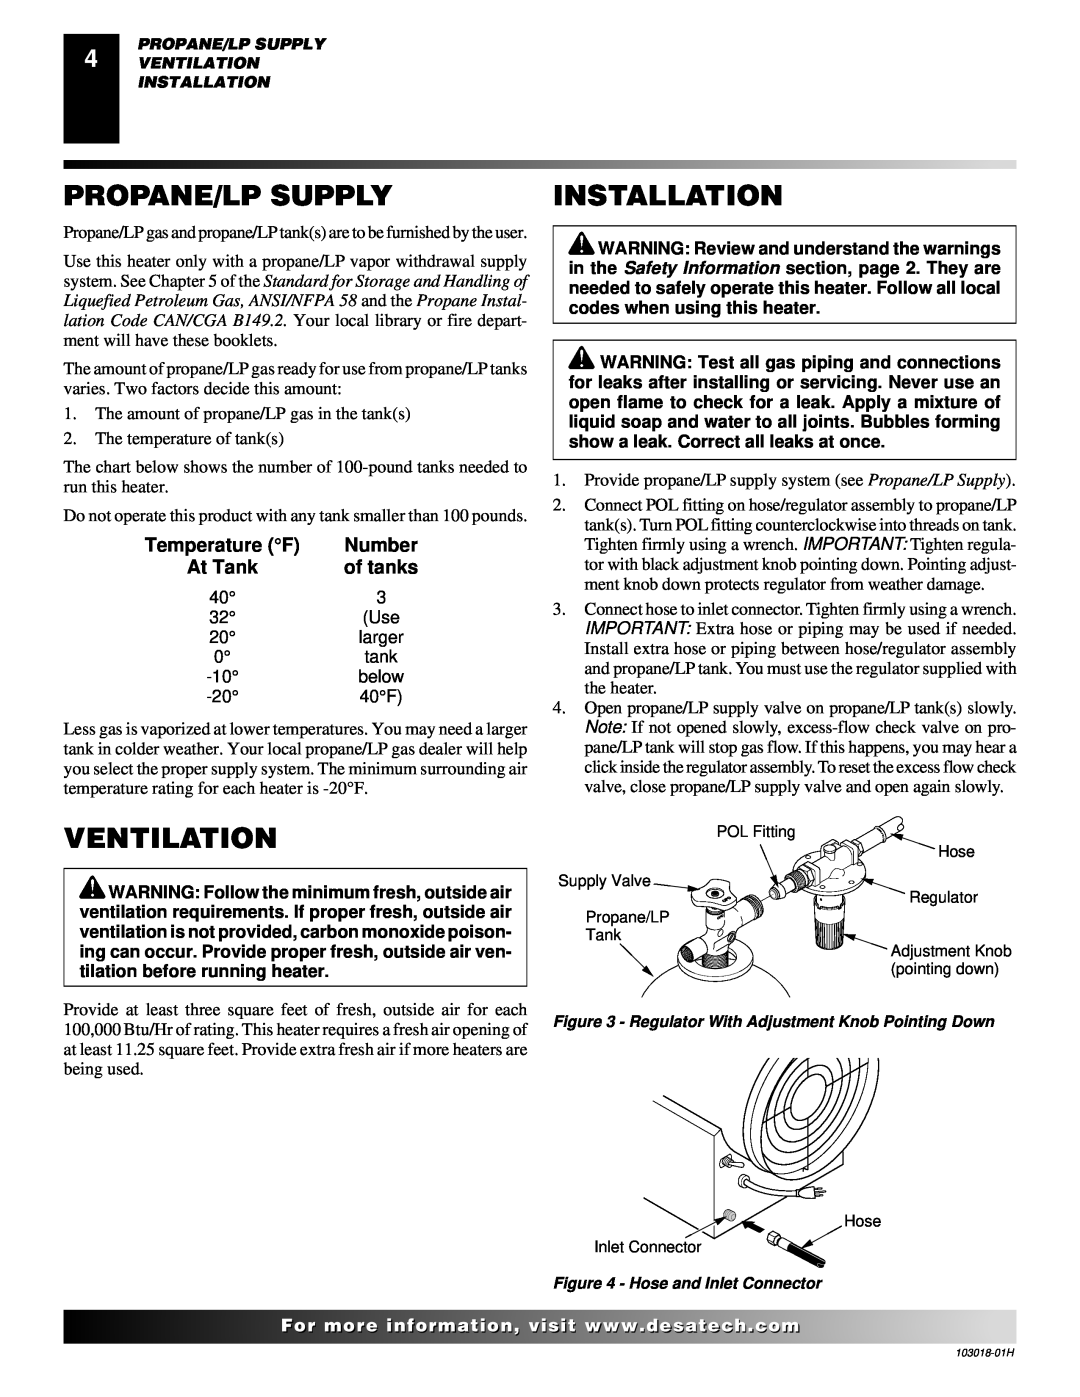 Desa BLP375AT owner manual Propane/Lp Supply, Ventilation, Installation, At Tank, of tanks, Number 